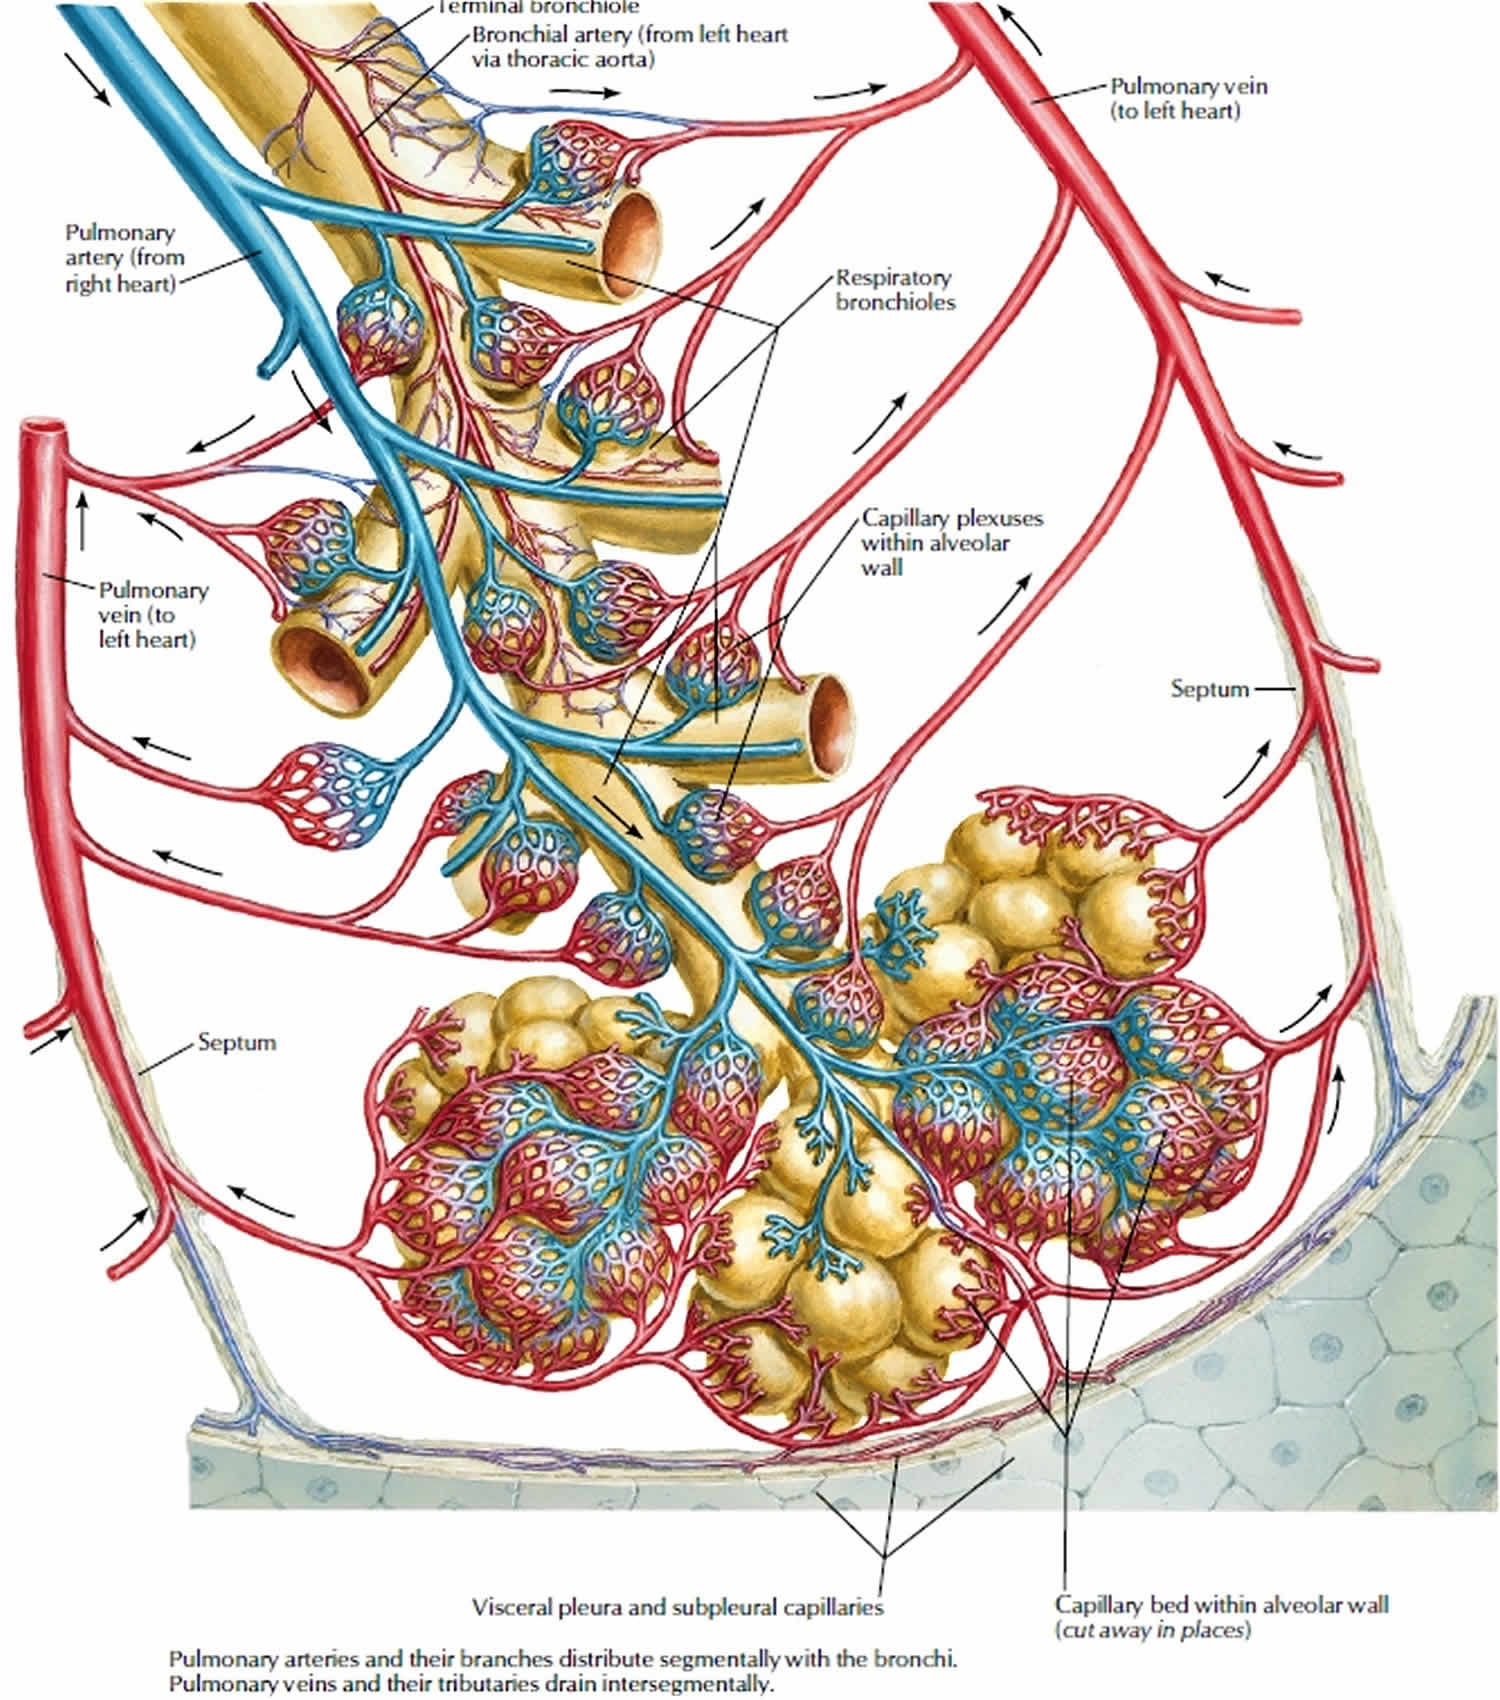 Pulmonary vein anatomy, function, location, ablation, stenosis & thrombosis